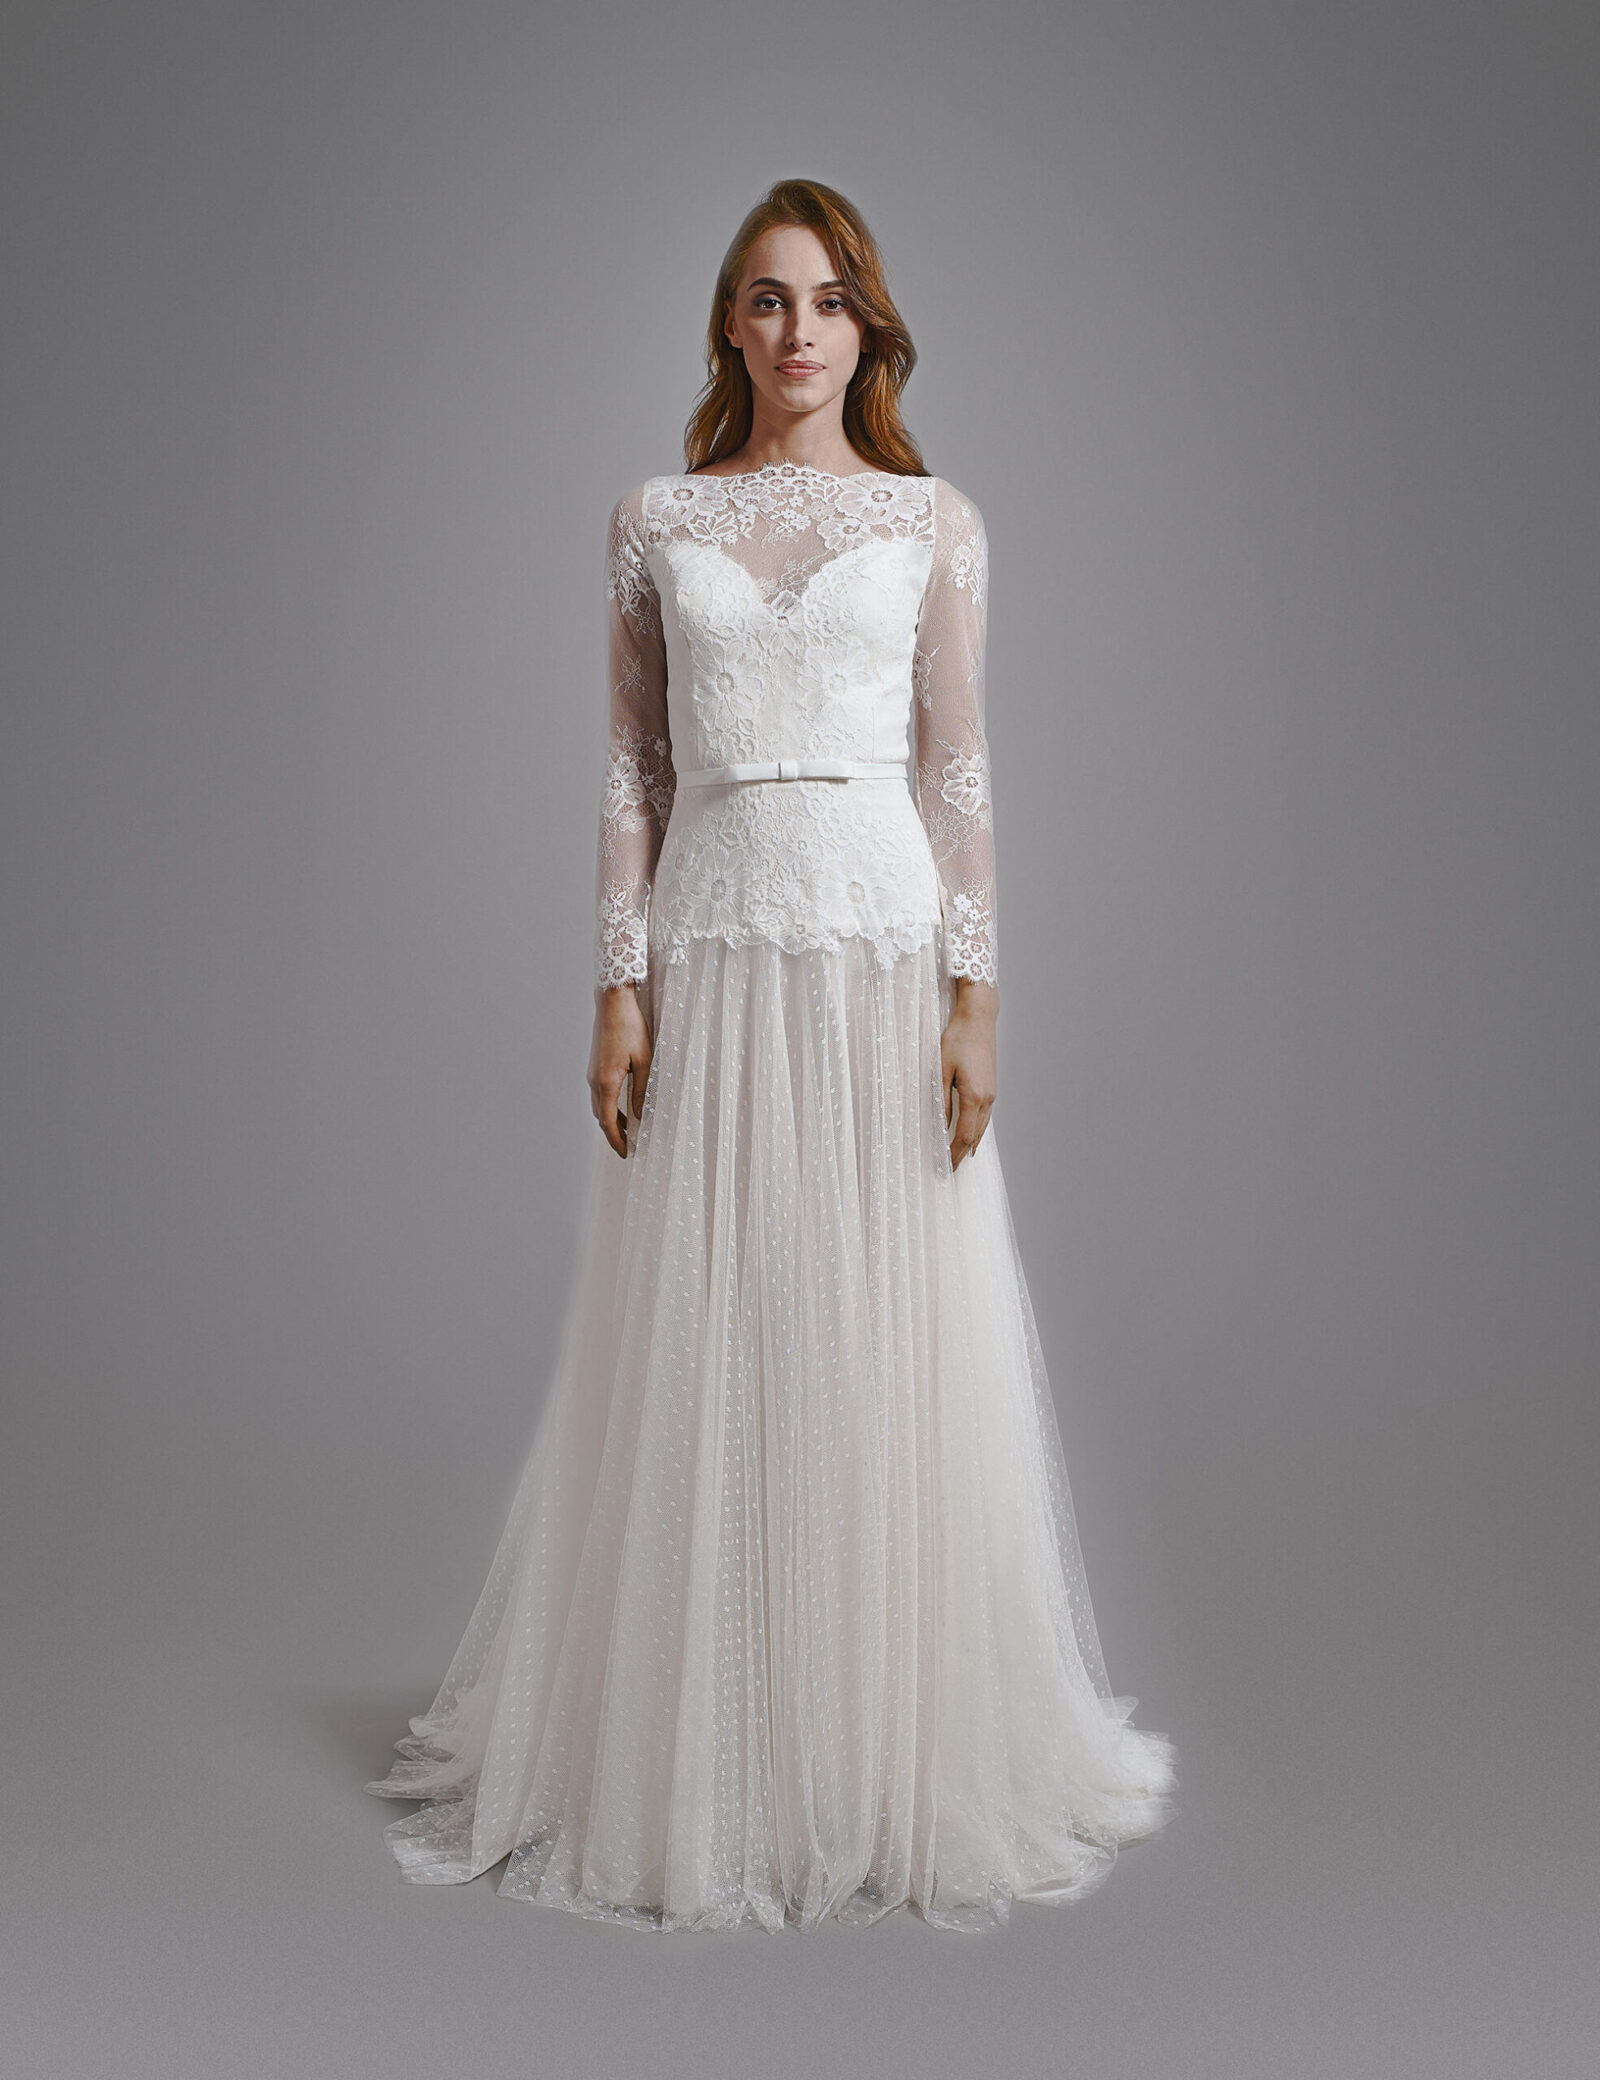 Simple Elegant Wedding Dress BHARB-LILYPAD-BH2020-0018-001-tall - LILYPAD menyasszonyi ruha